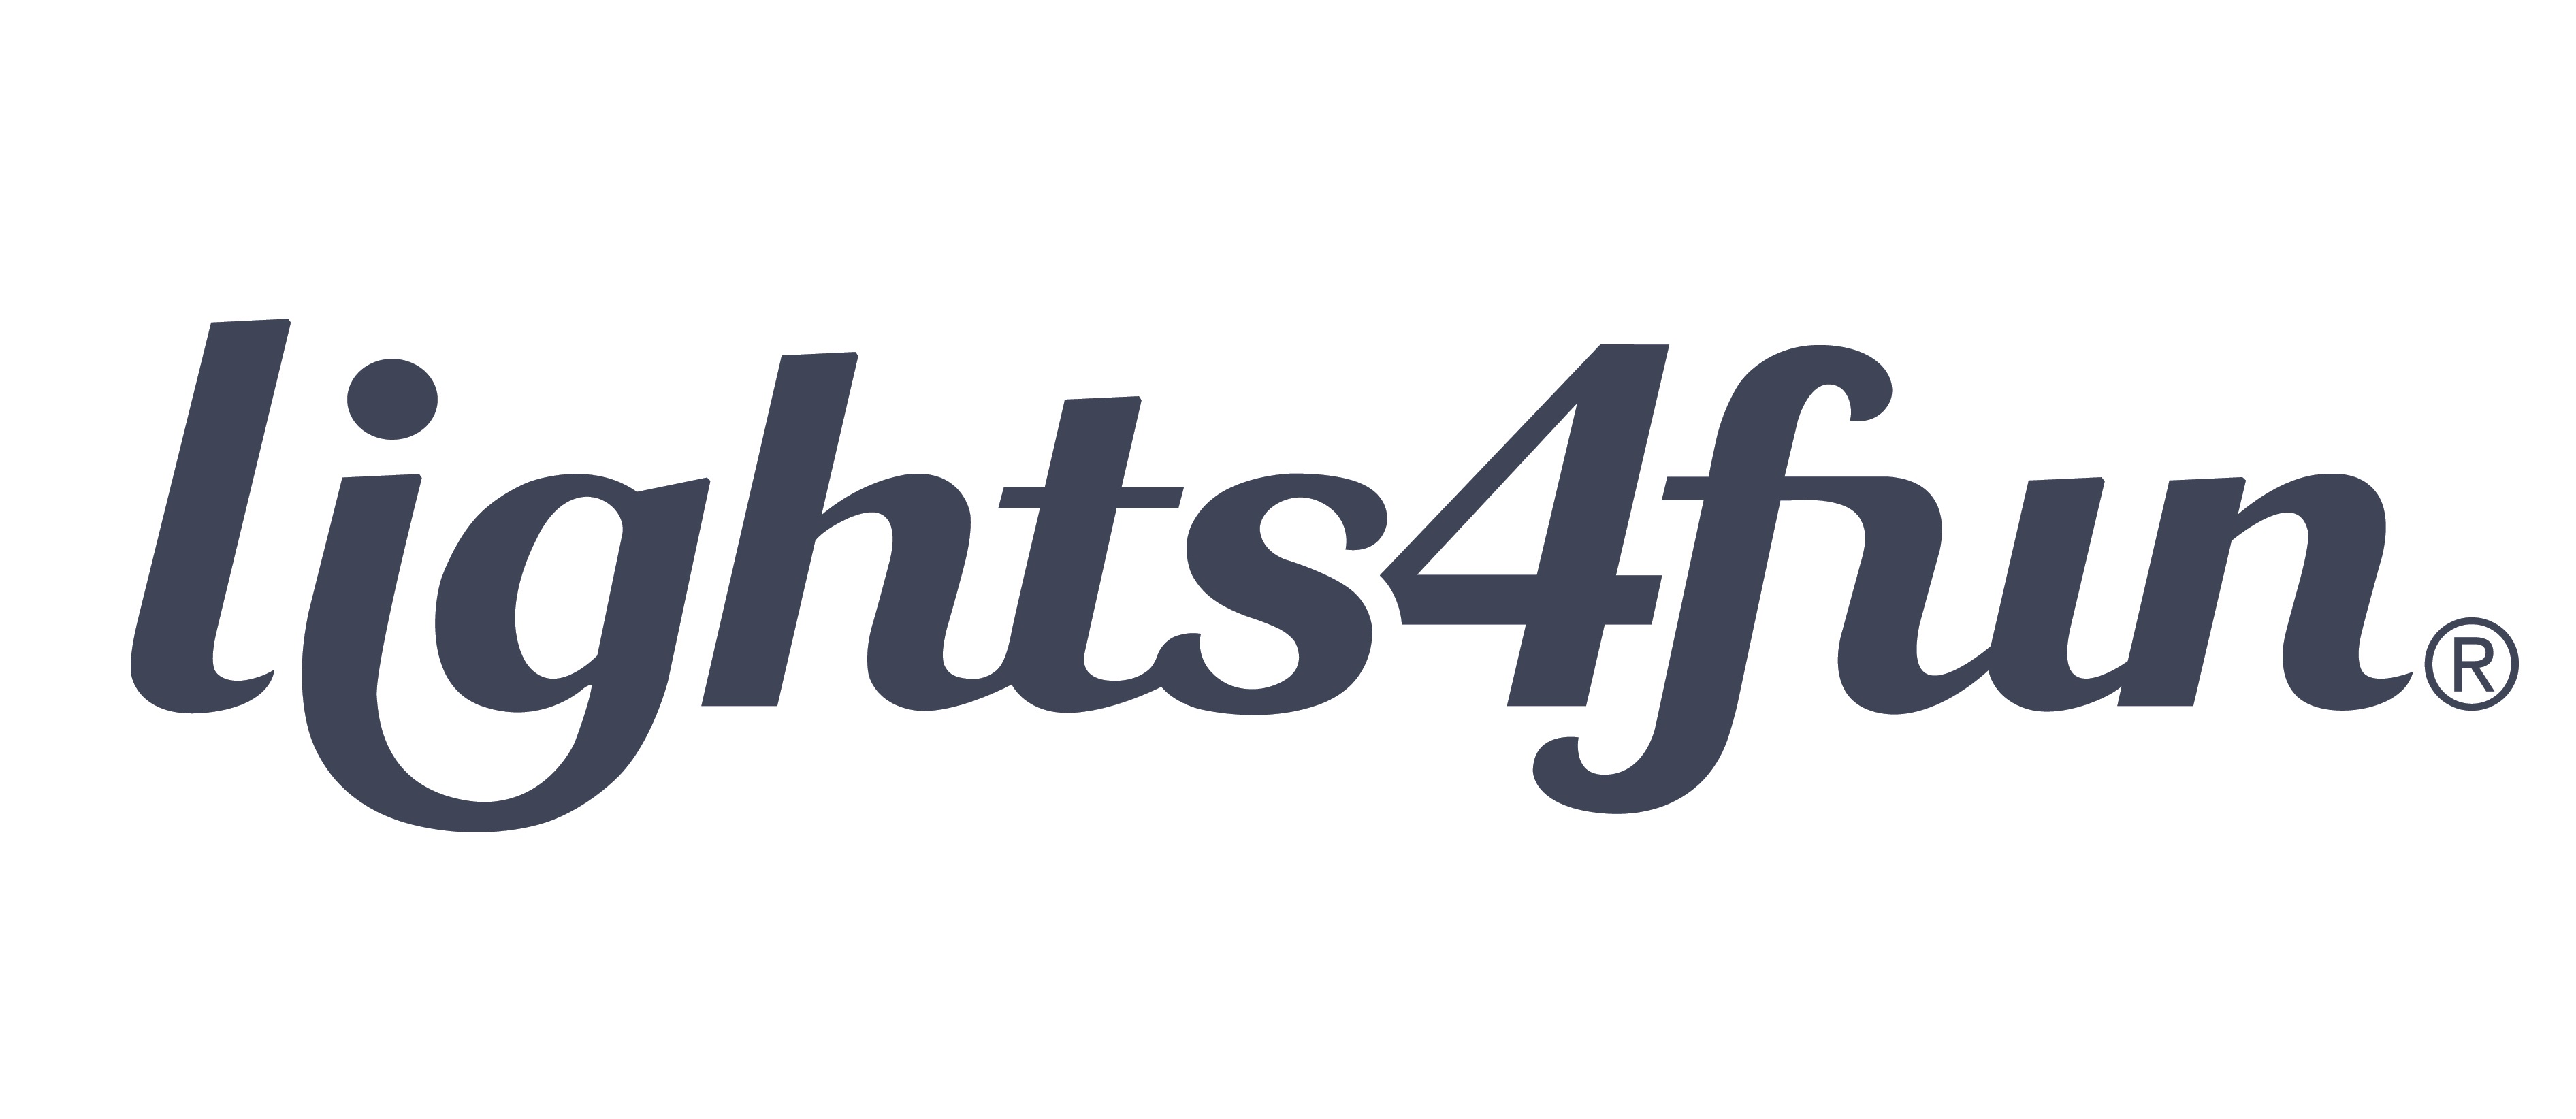 Lights4fun logo